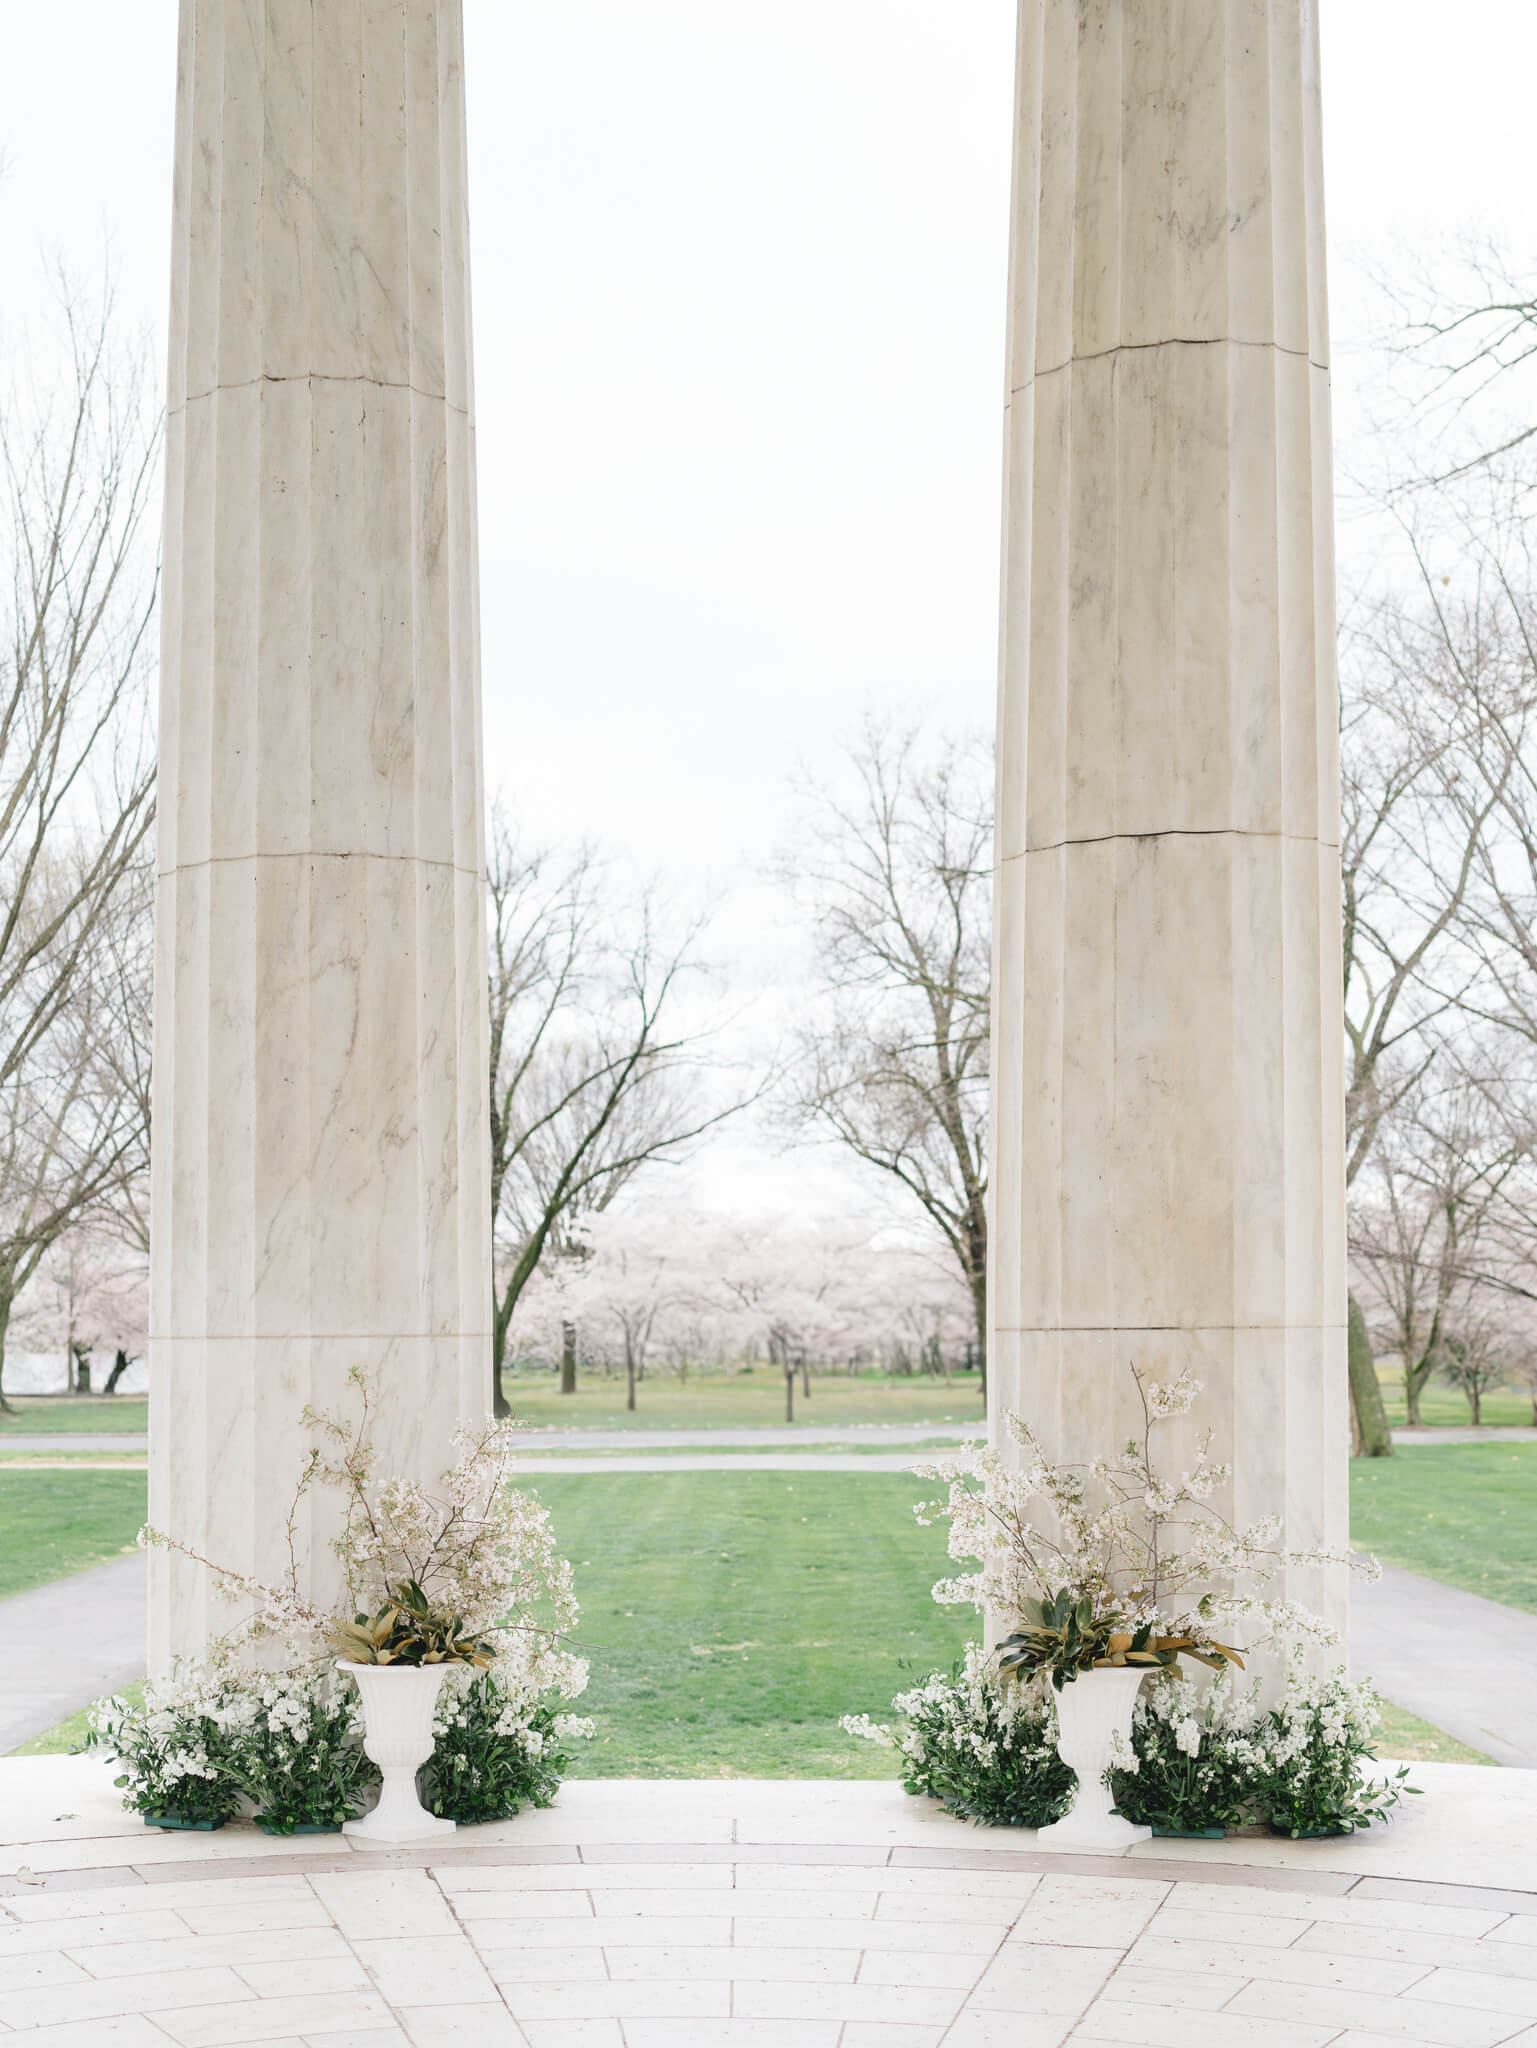 Floral arrangements set up for a cherry blossom elopements under the columns of the D.C. War Memorial